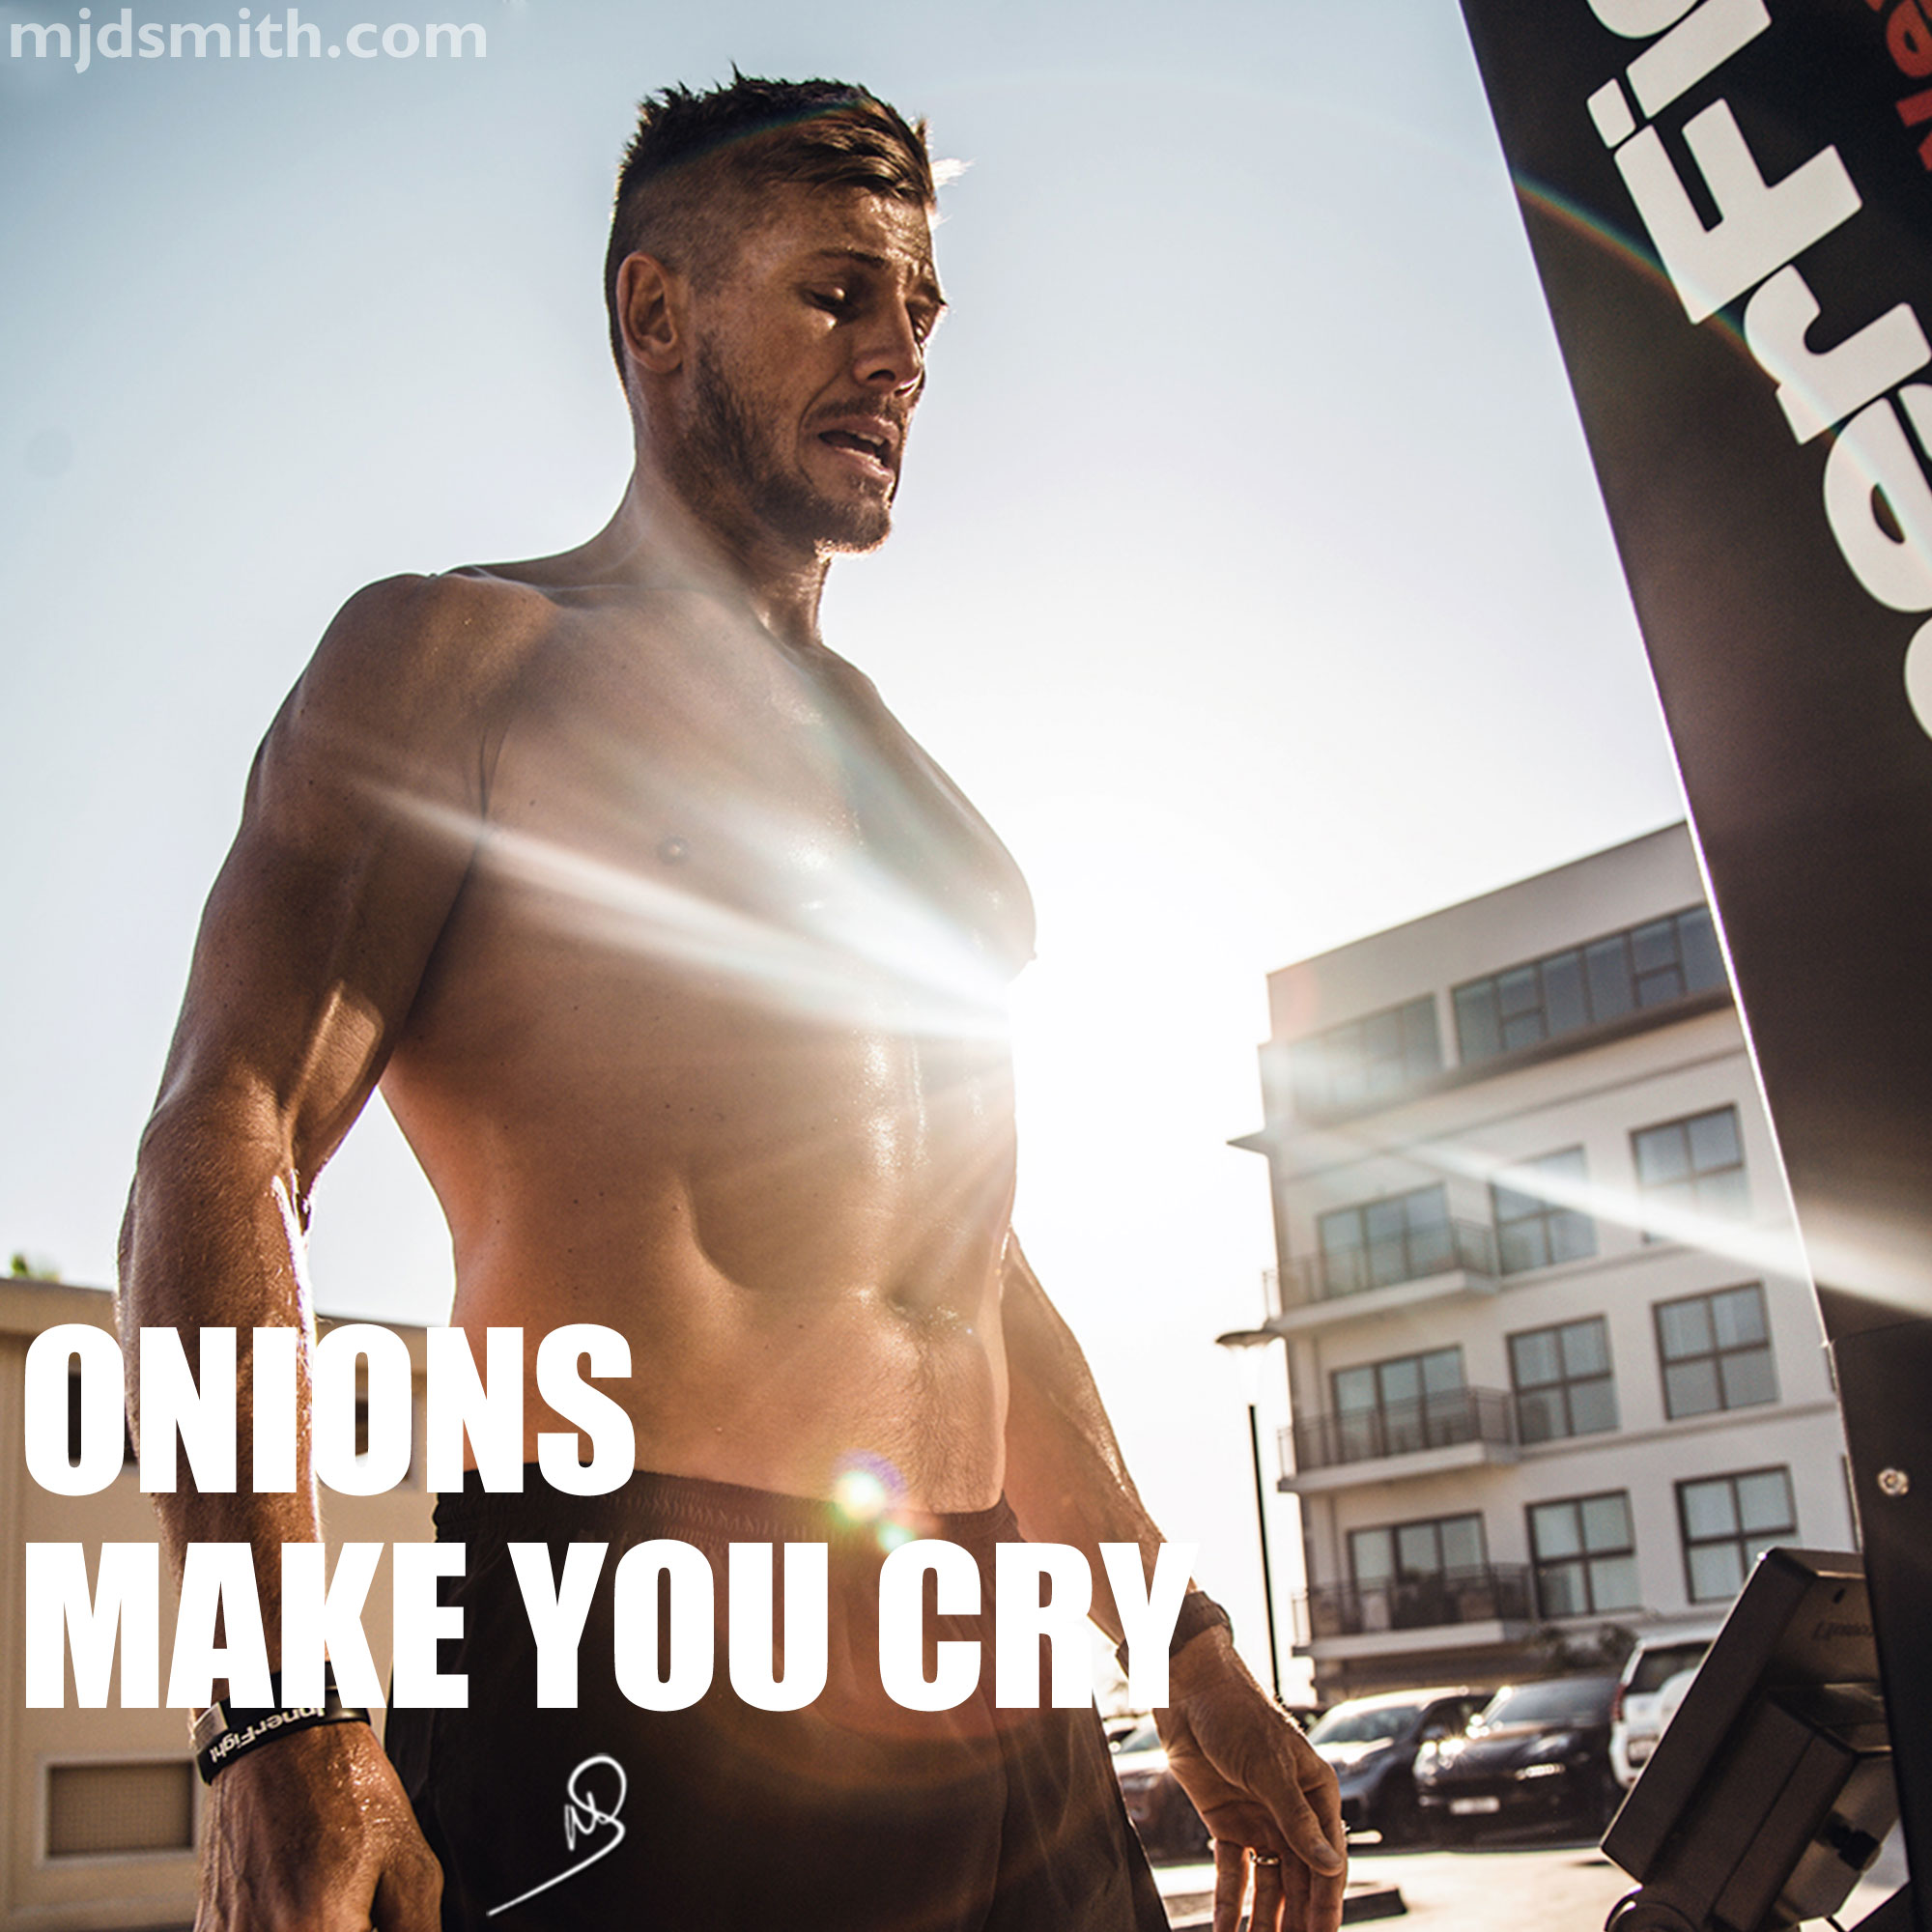 Onions make you cry